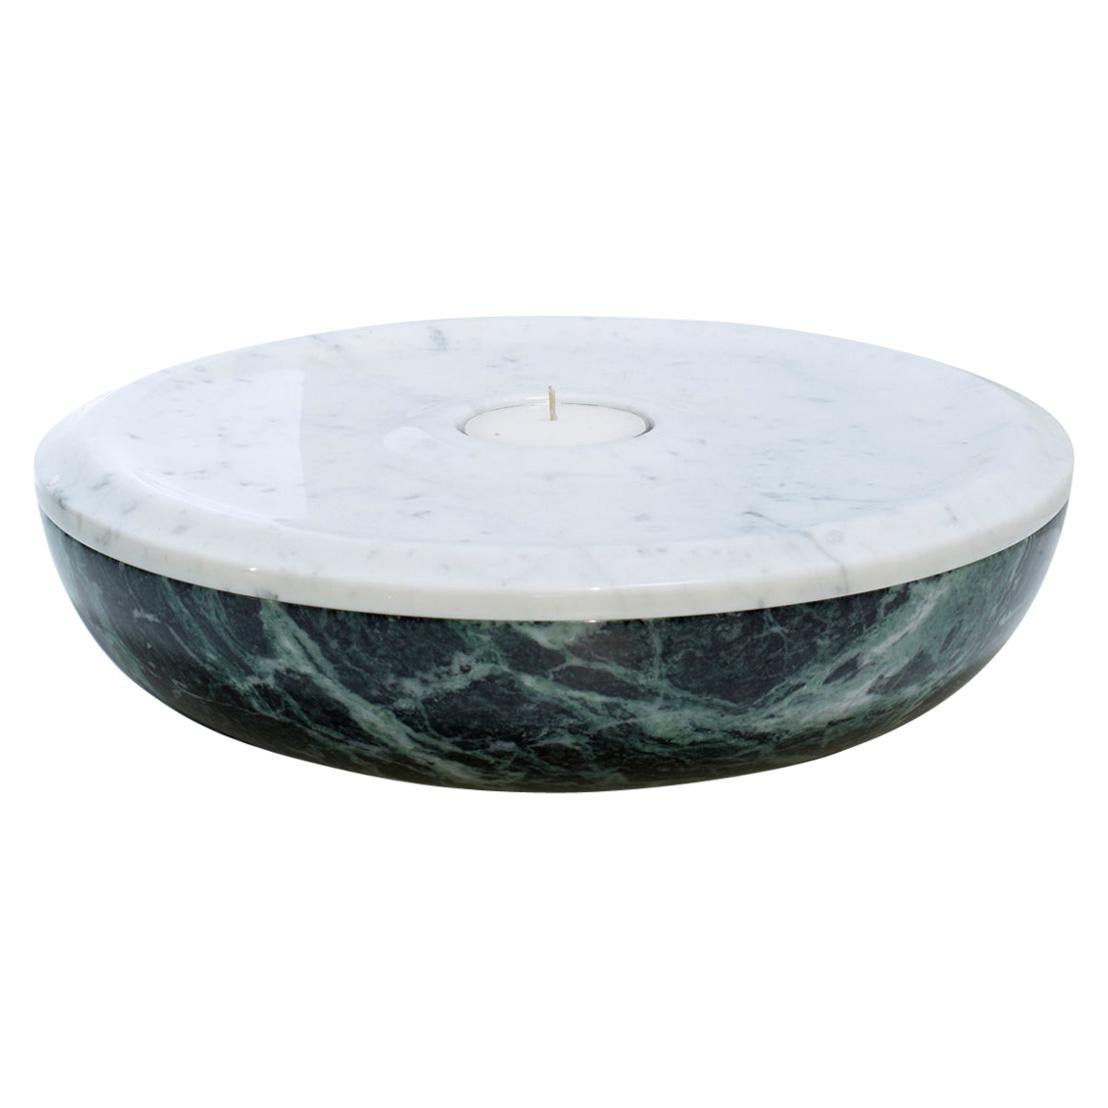 Bowl and Candleholder Made of Carrara Marble by Designer Torsten Neuland, 2014 For Sale